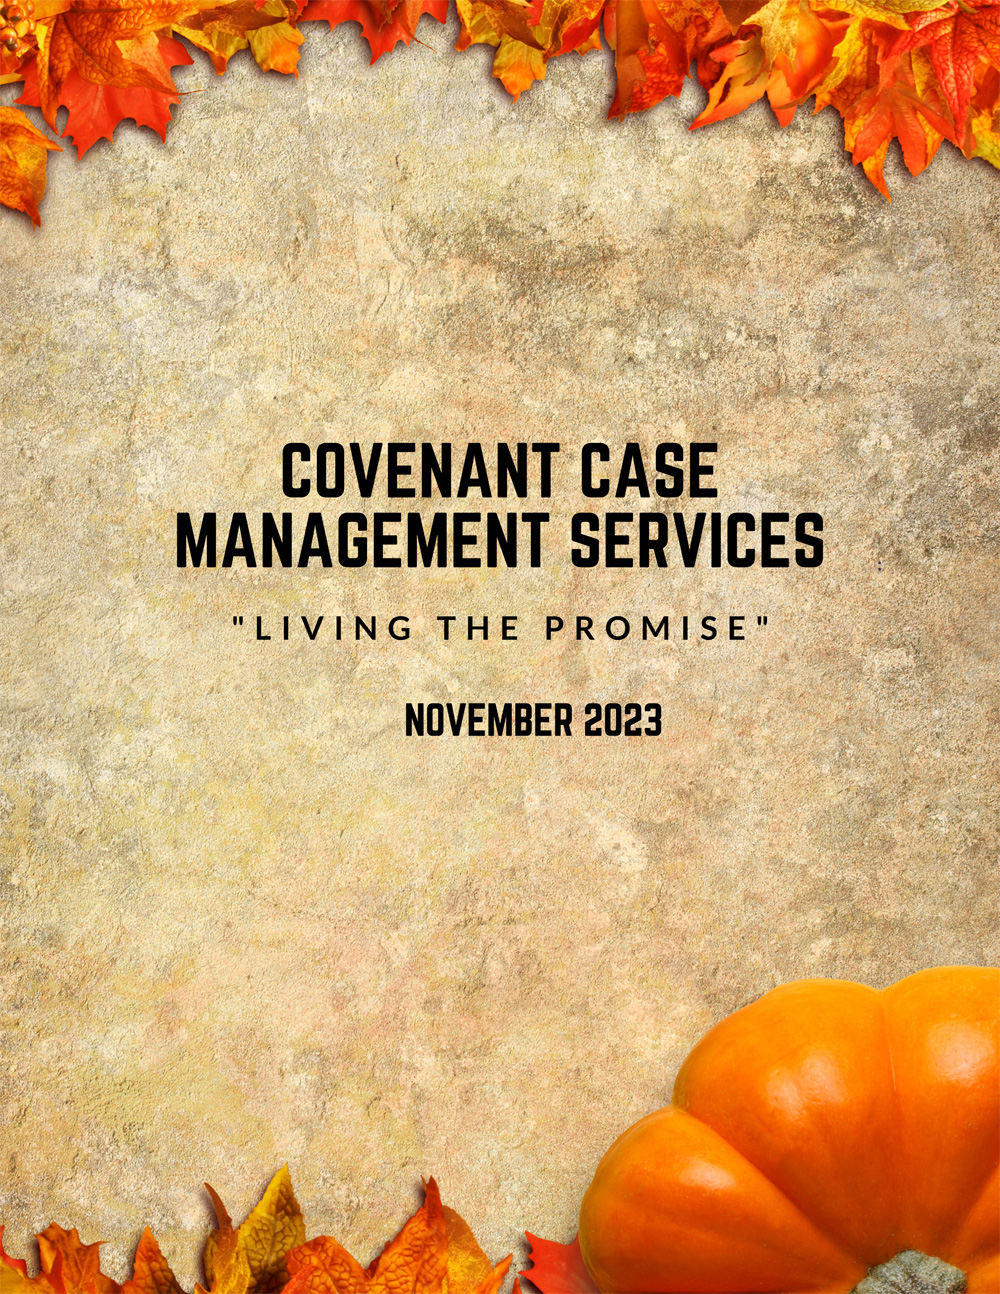 November 2023 Newsletter from Covenant Case Management Services